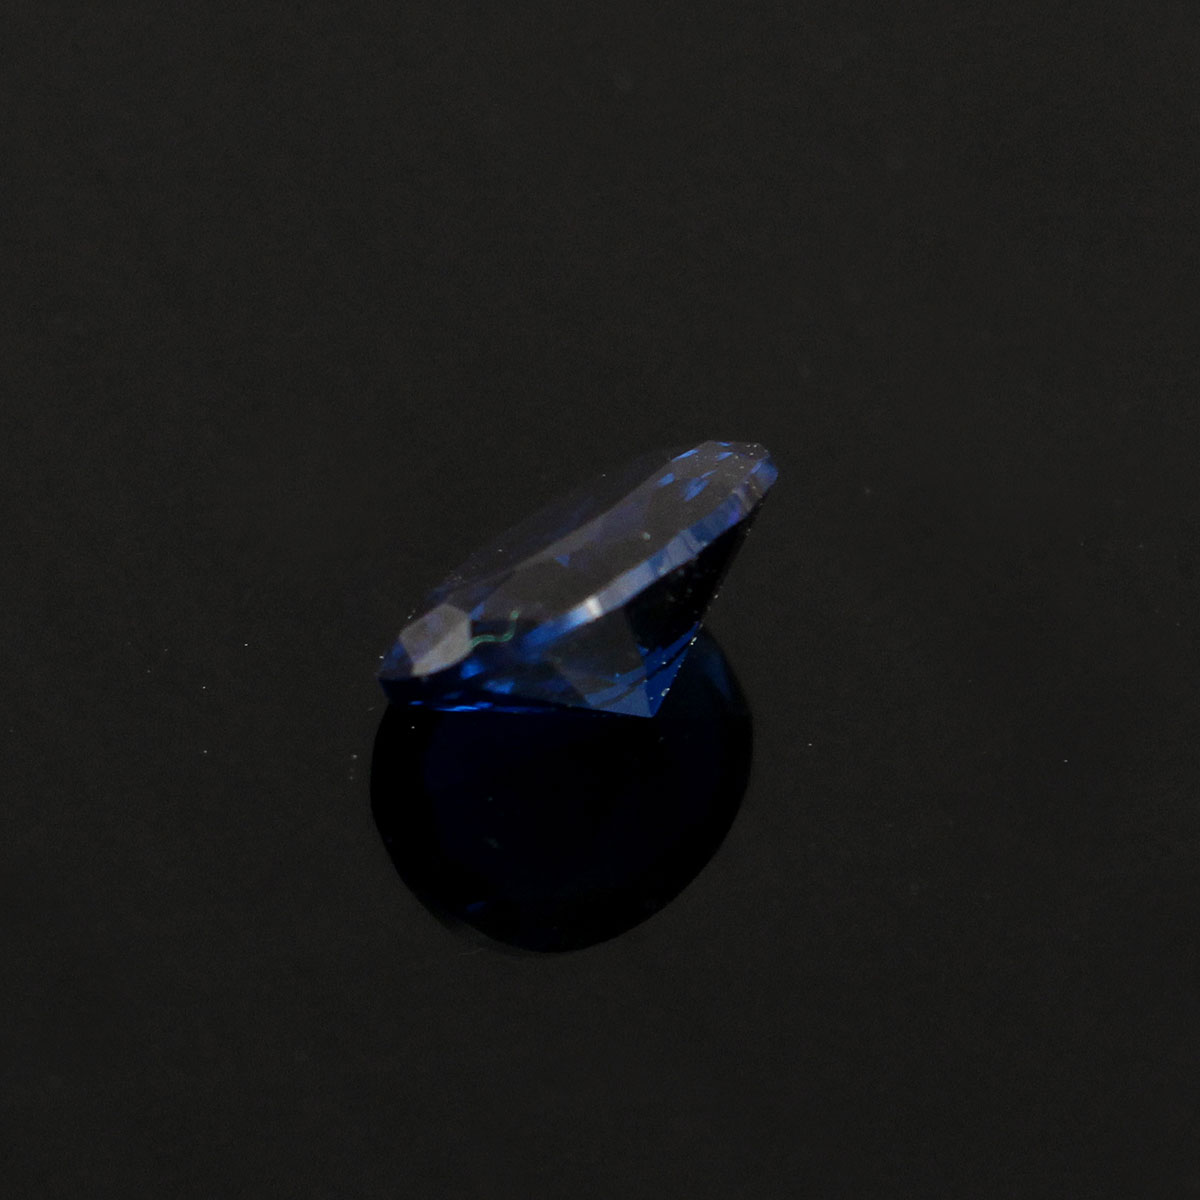 8x6mm Oval Dark Blue Gemstone DIY Design Lustrous Jewelry Making Accessories